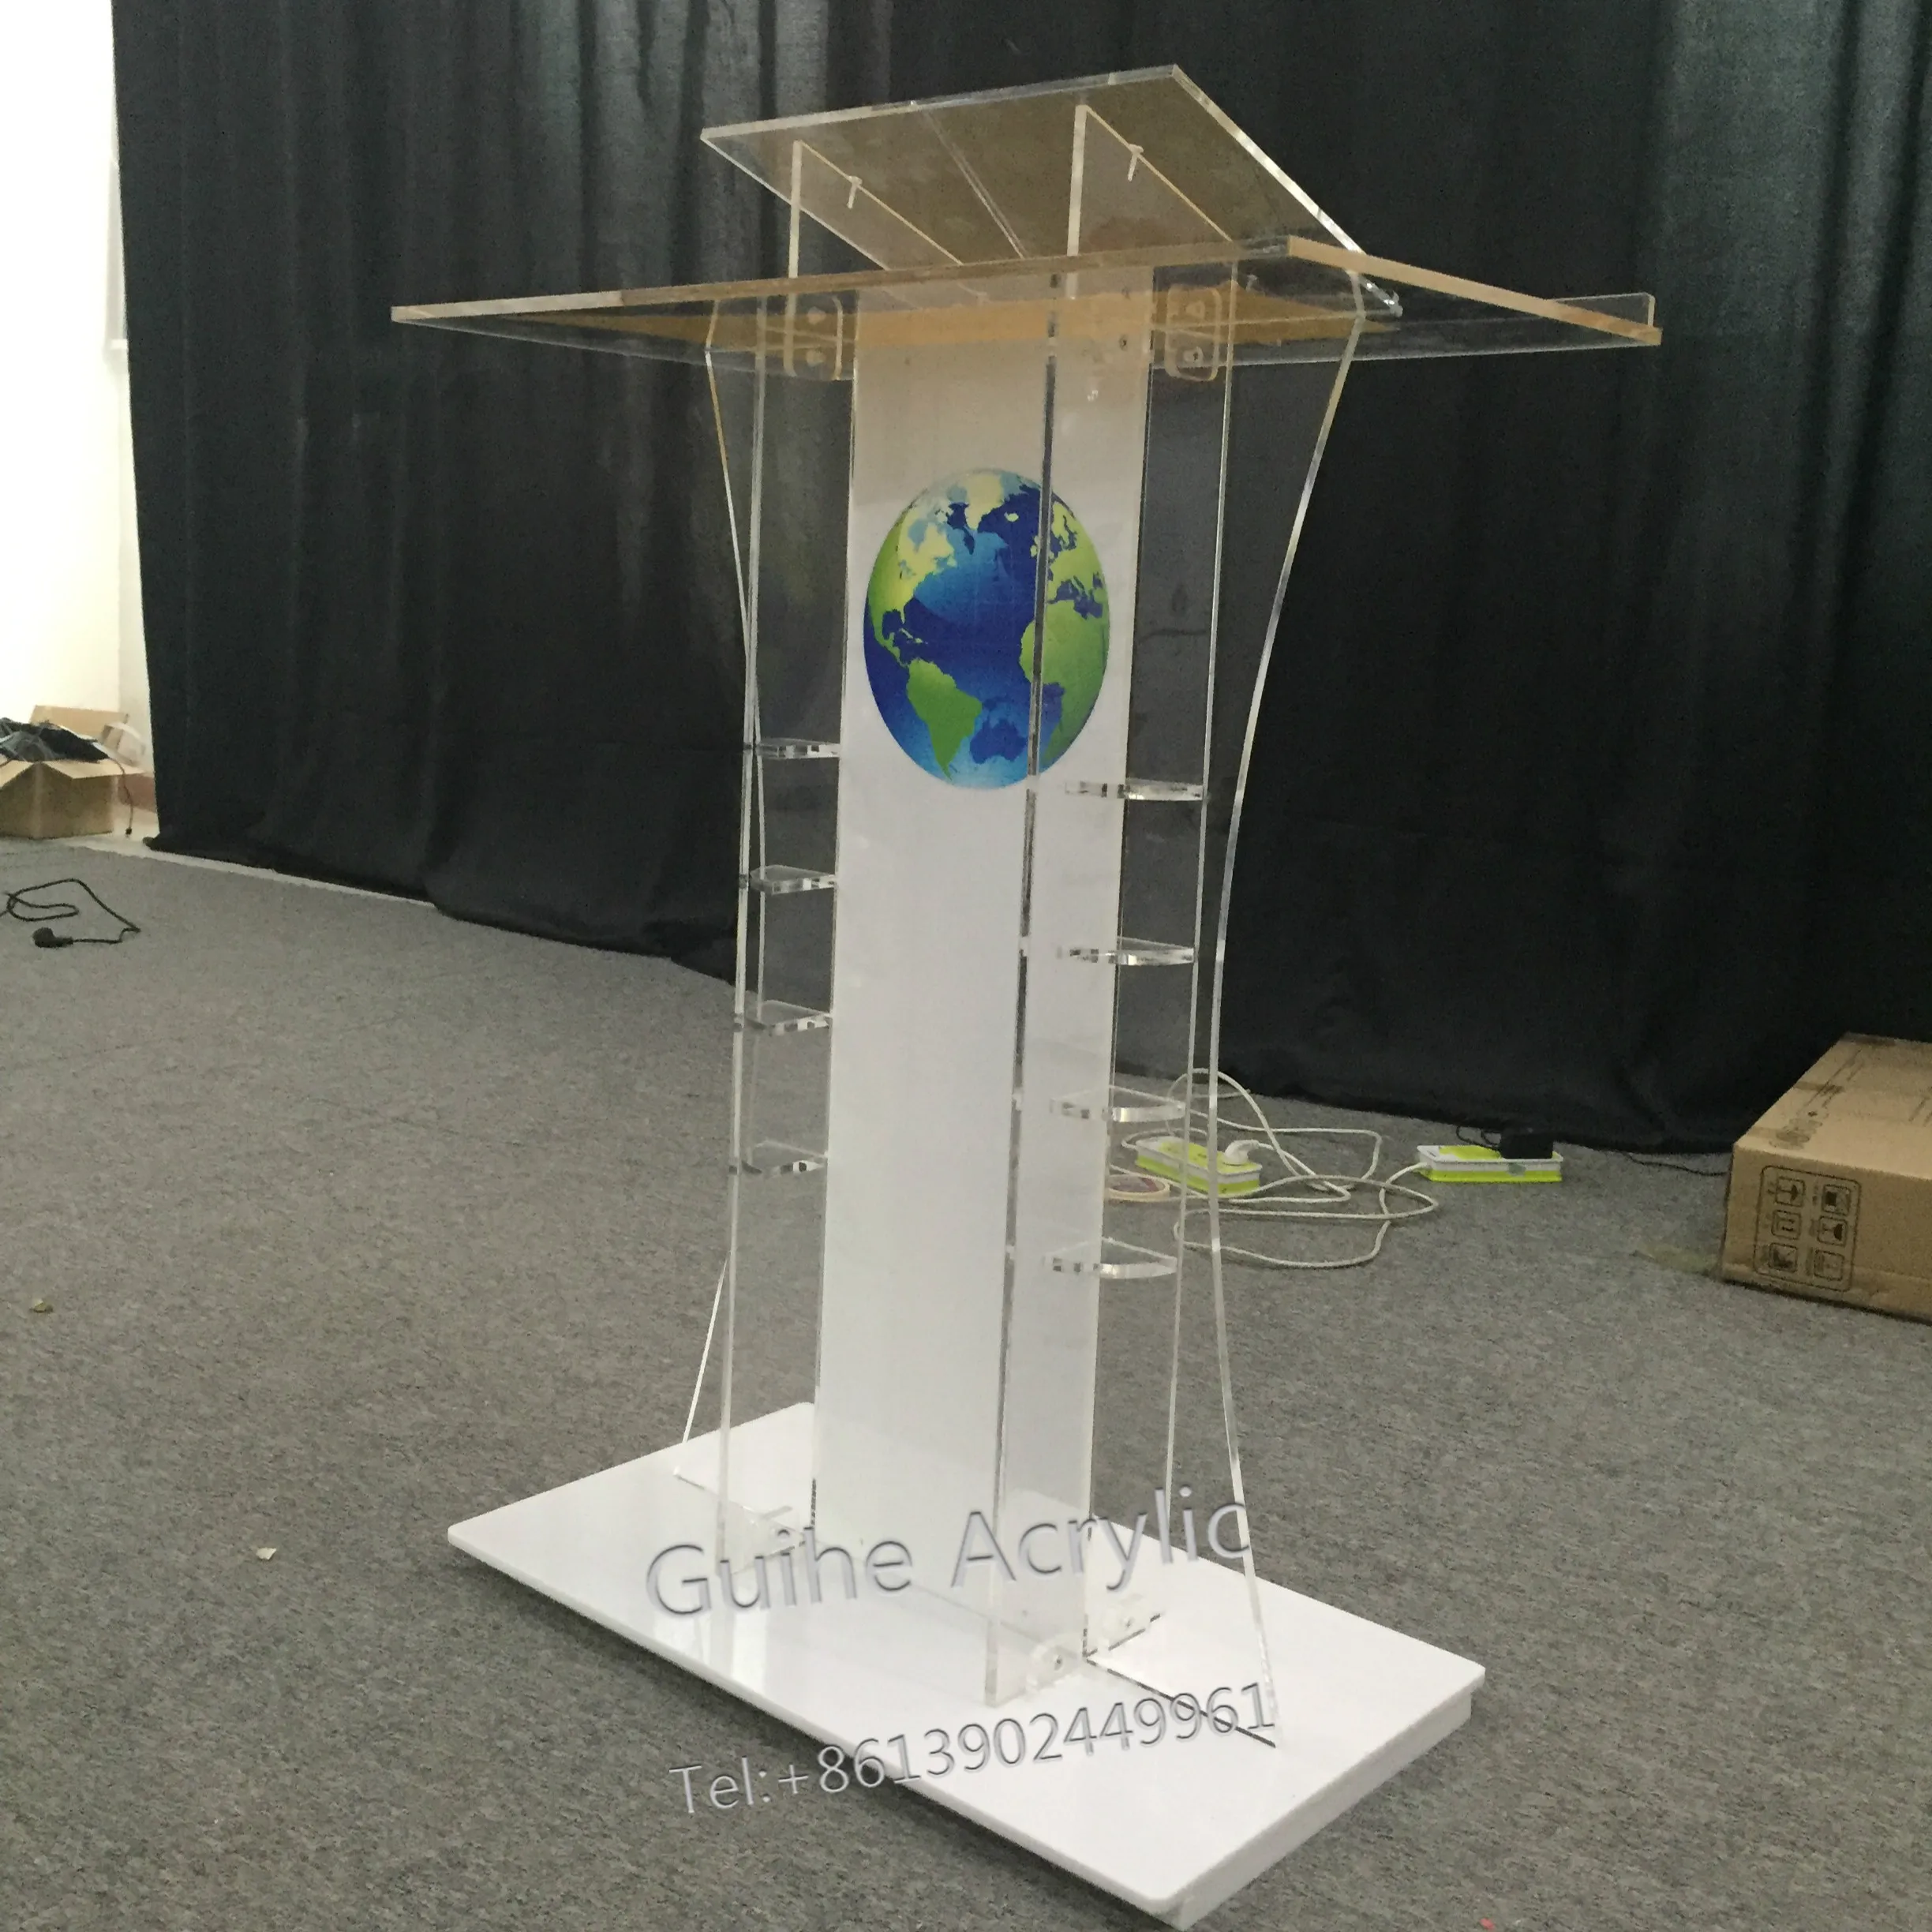 GHY-Earth акриловая подставка Подиум лектерн-школа-церковь-бизнес-конференции